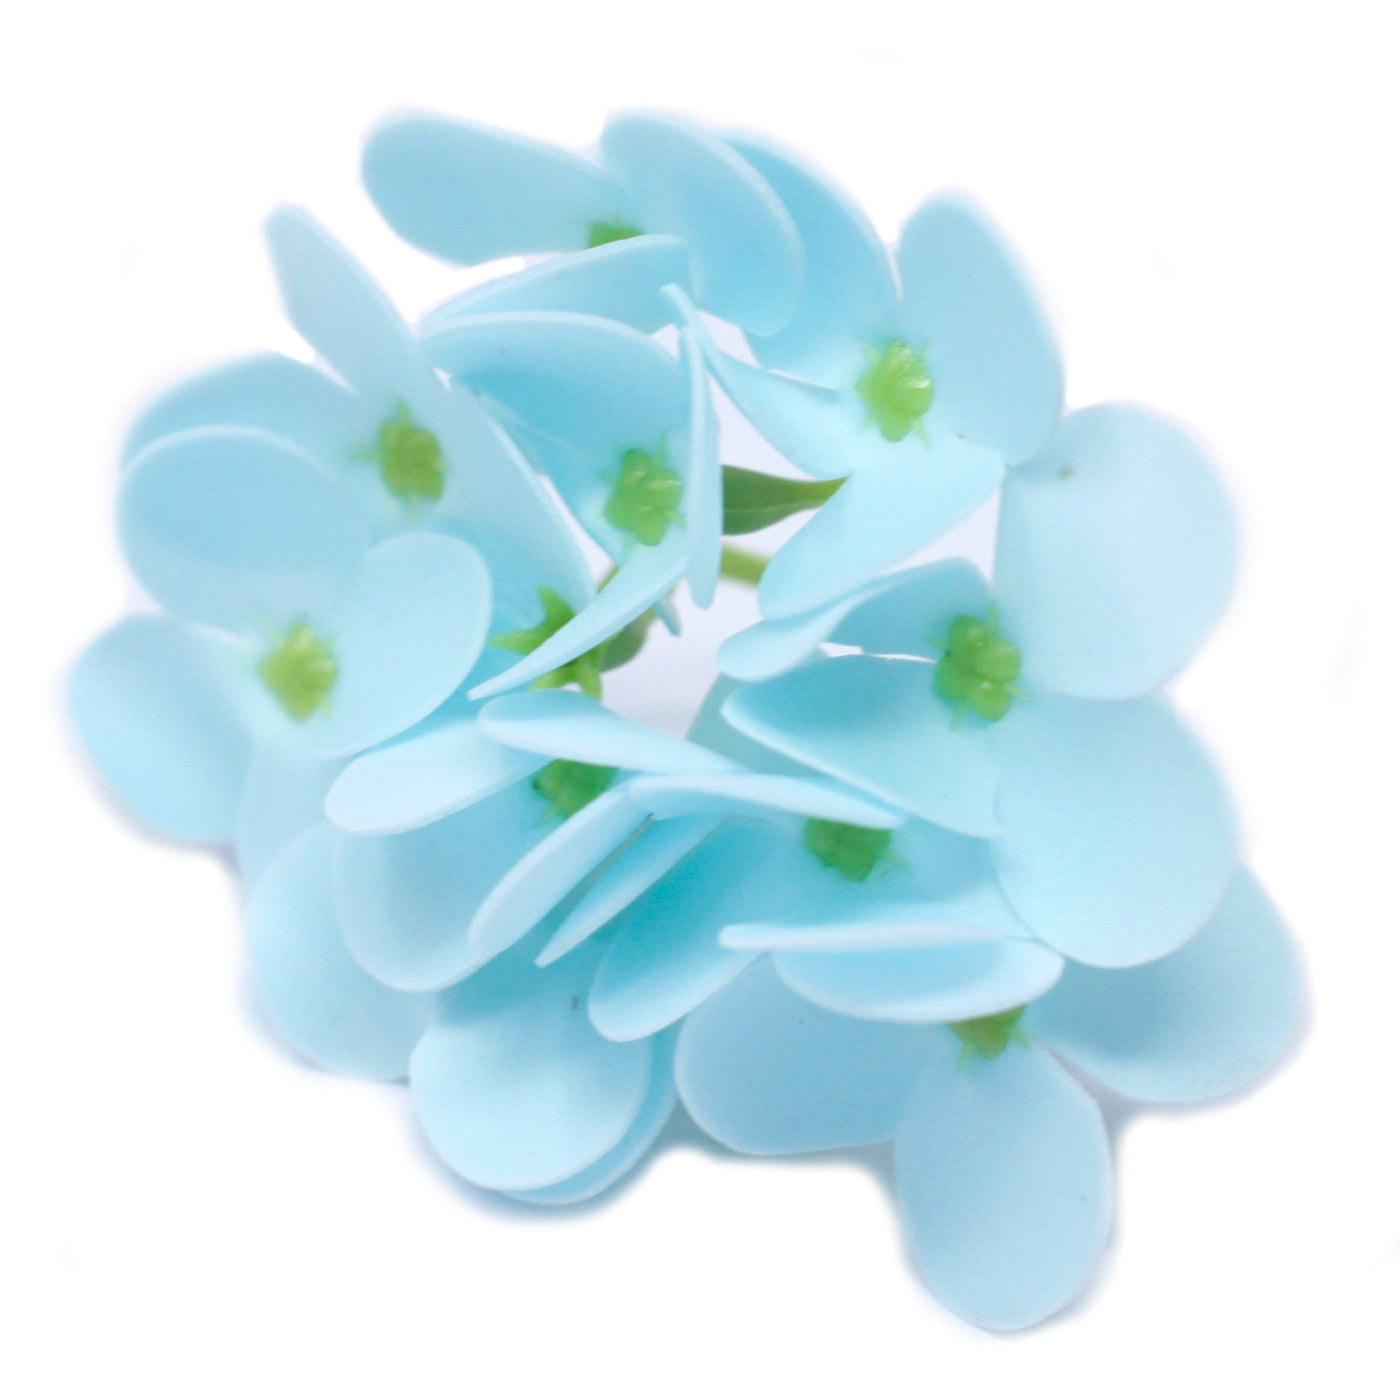 Craft Soap Flowers - Hyacinth Bean - Baby Blue x 10 pcs